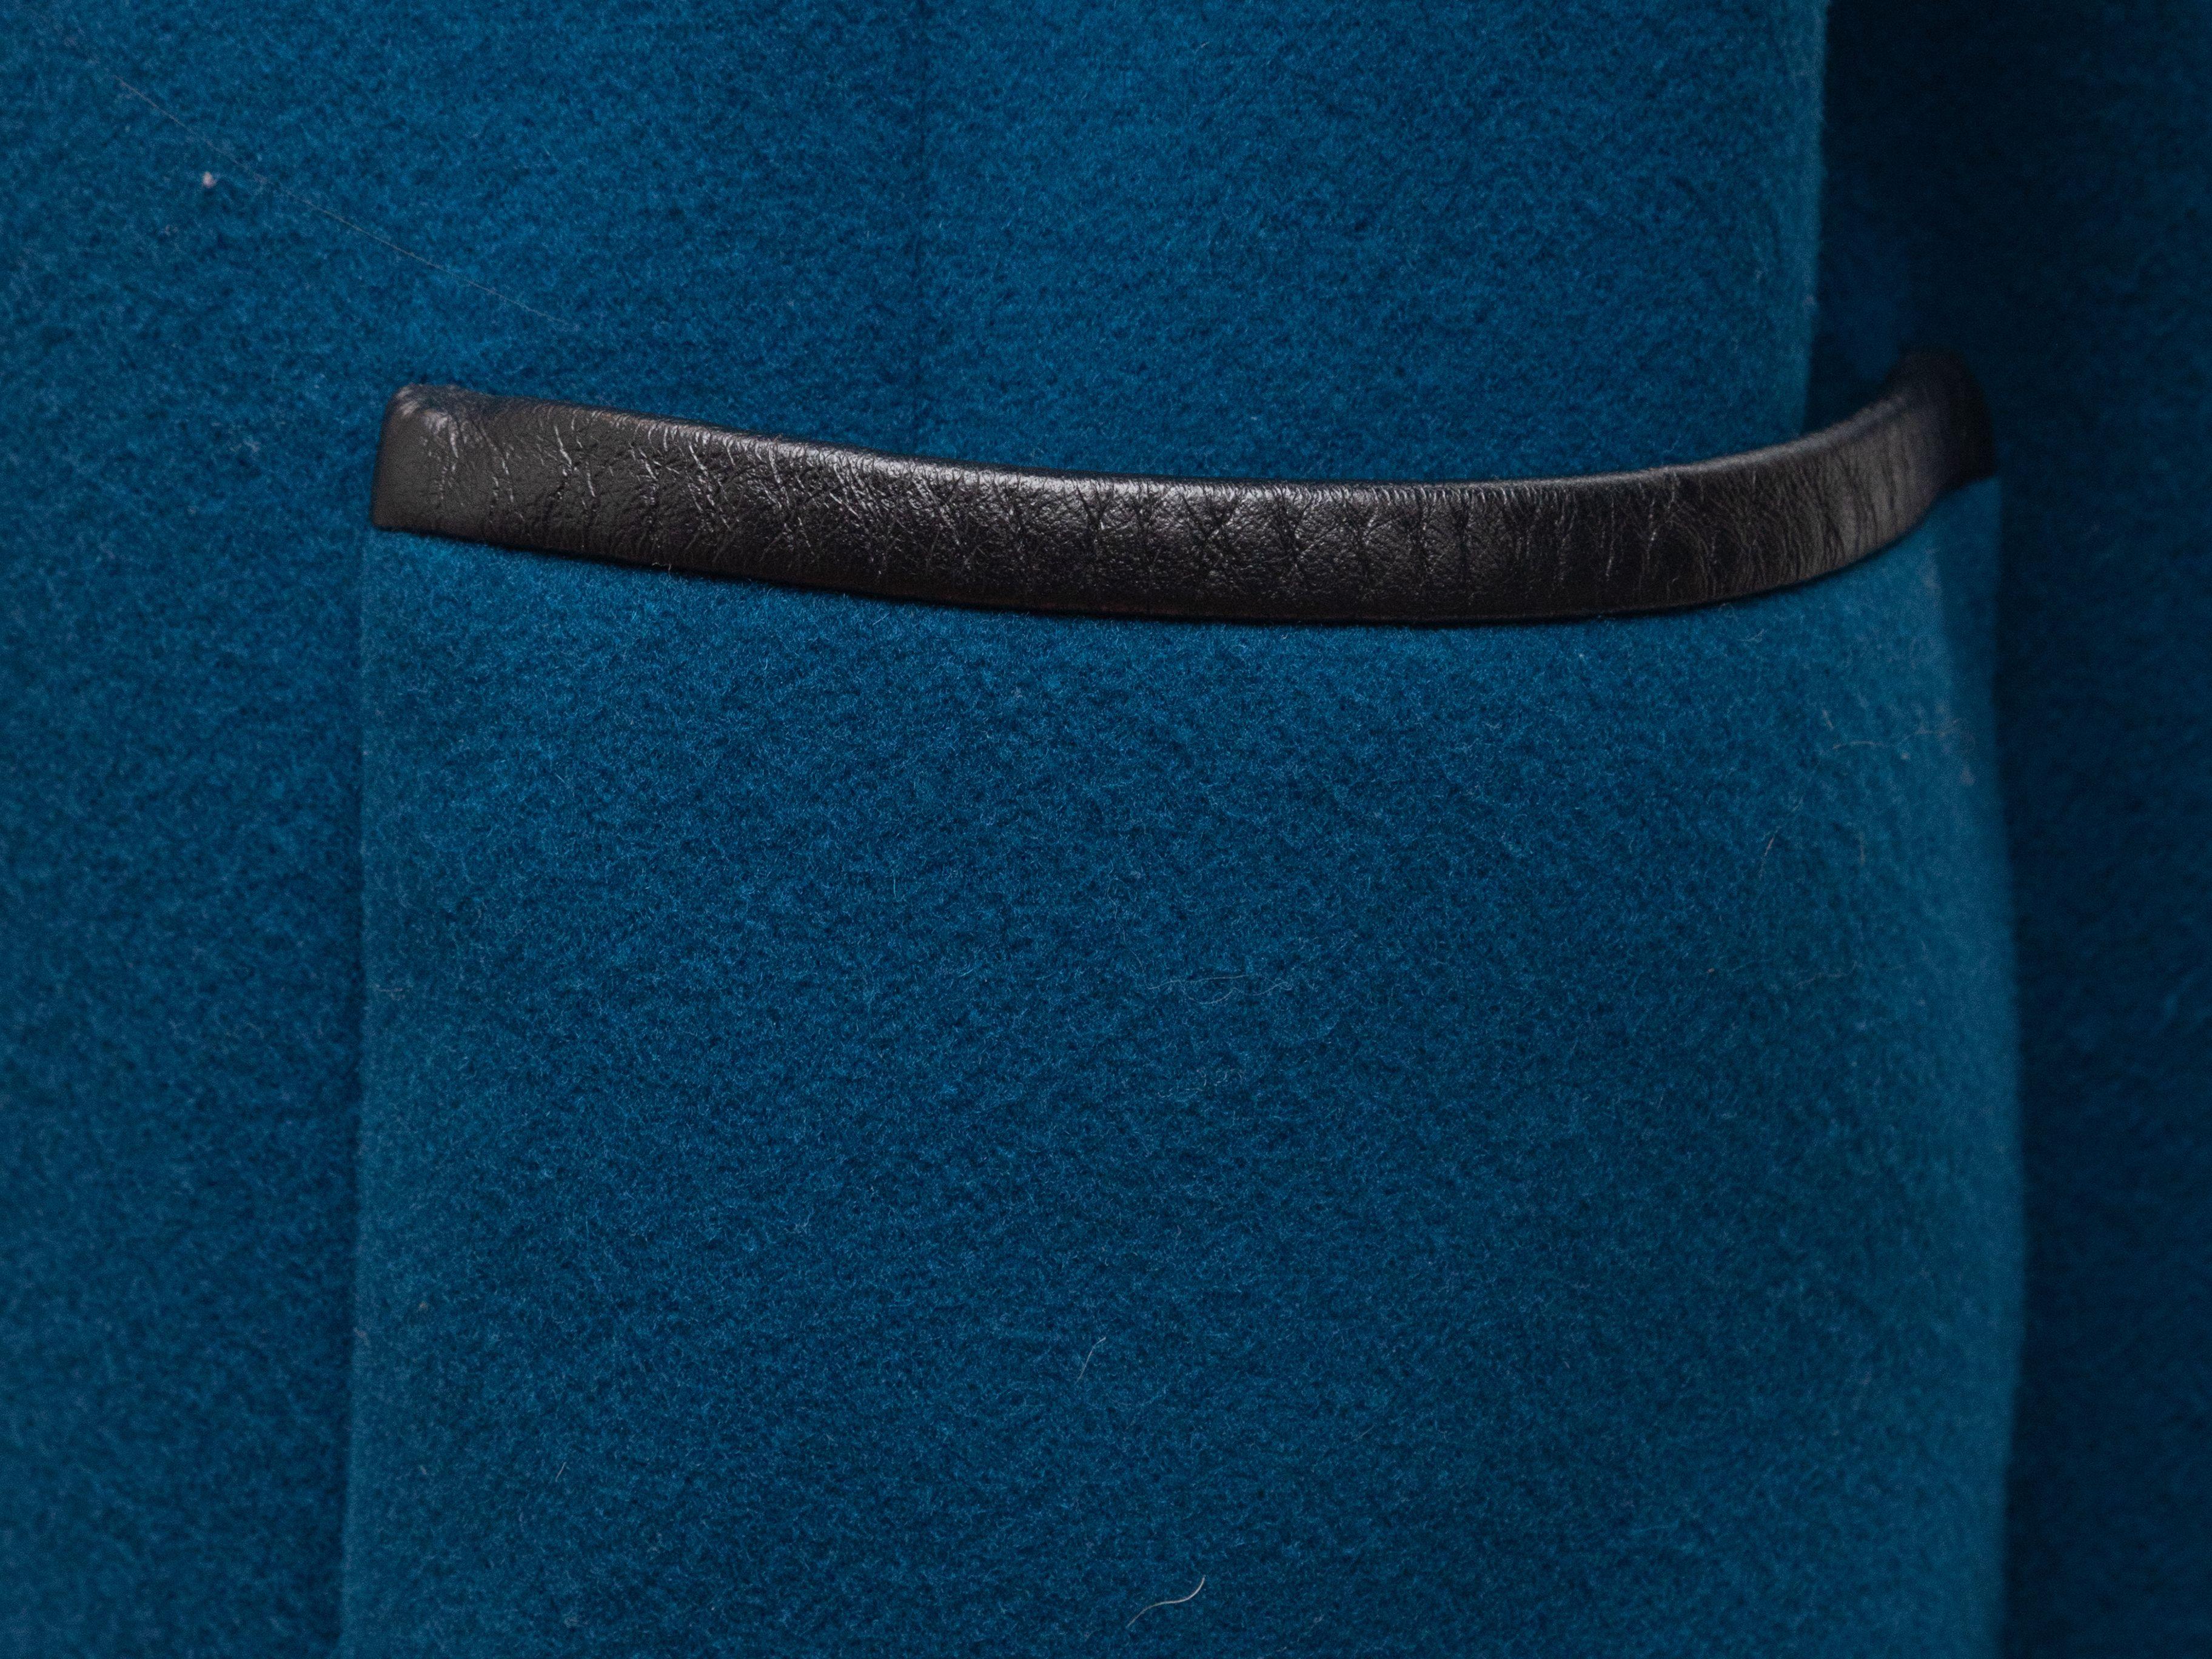        Trigere Teal & Black Wool Leather-Trimmed Coat 5